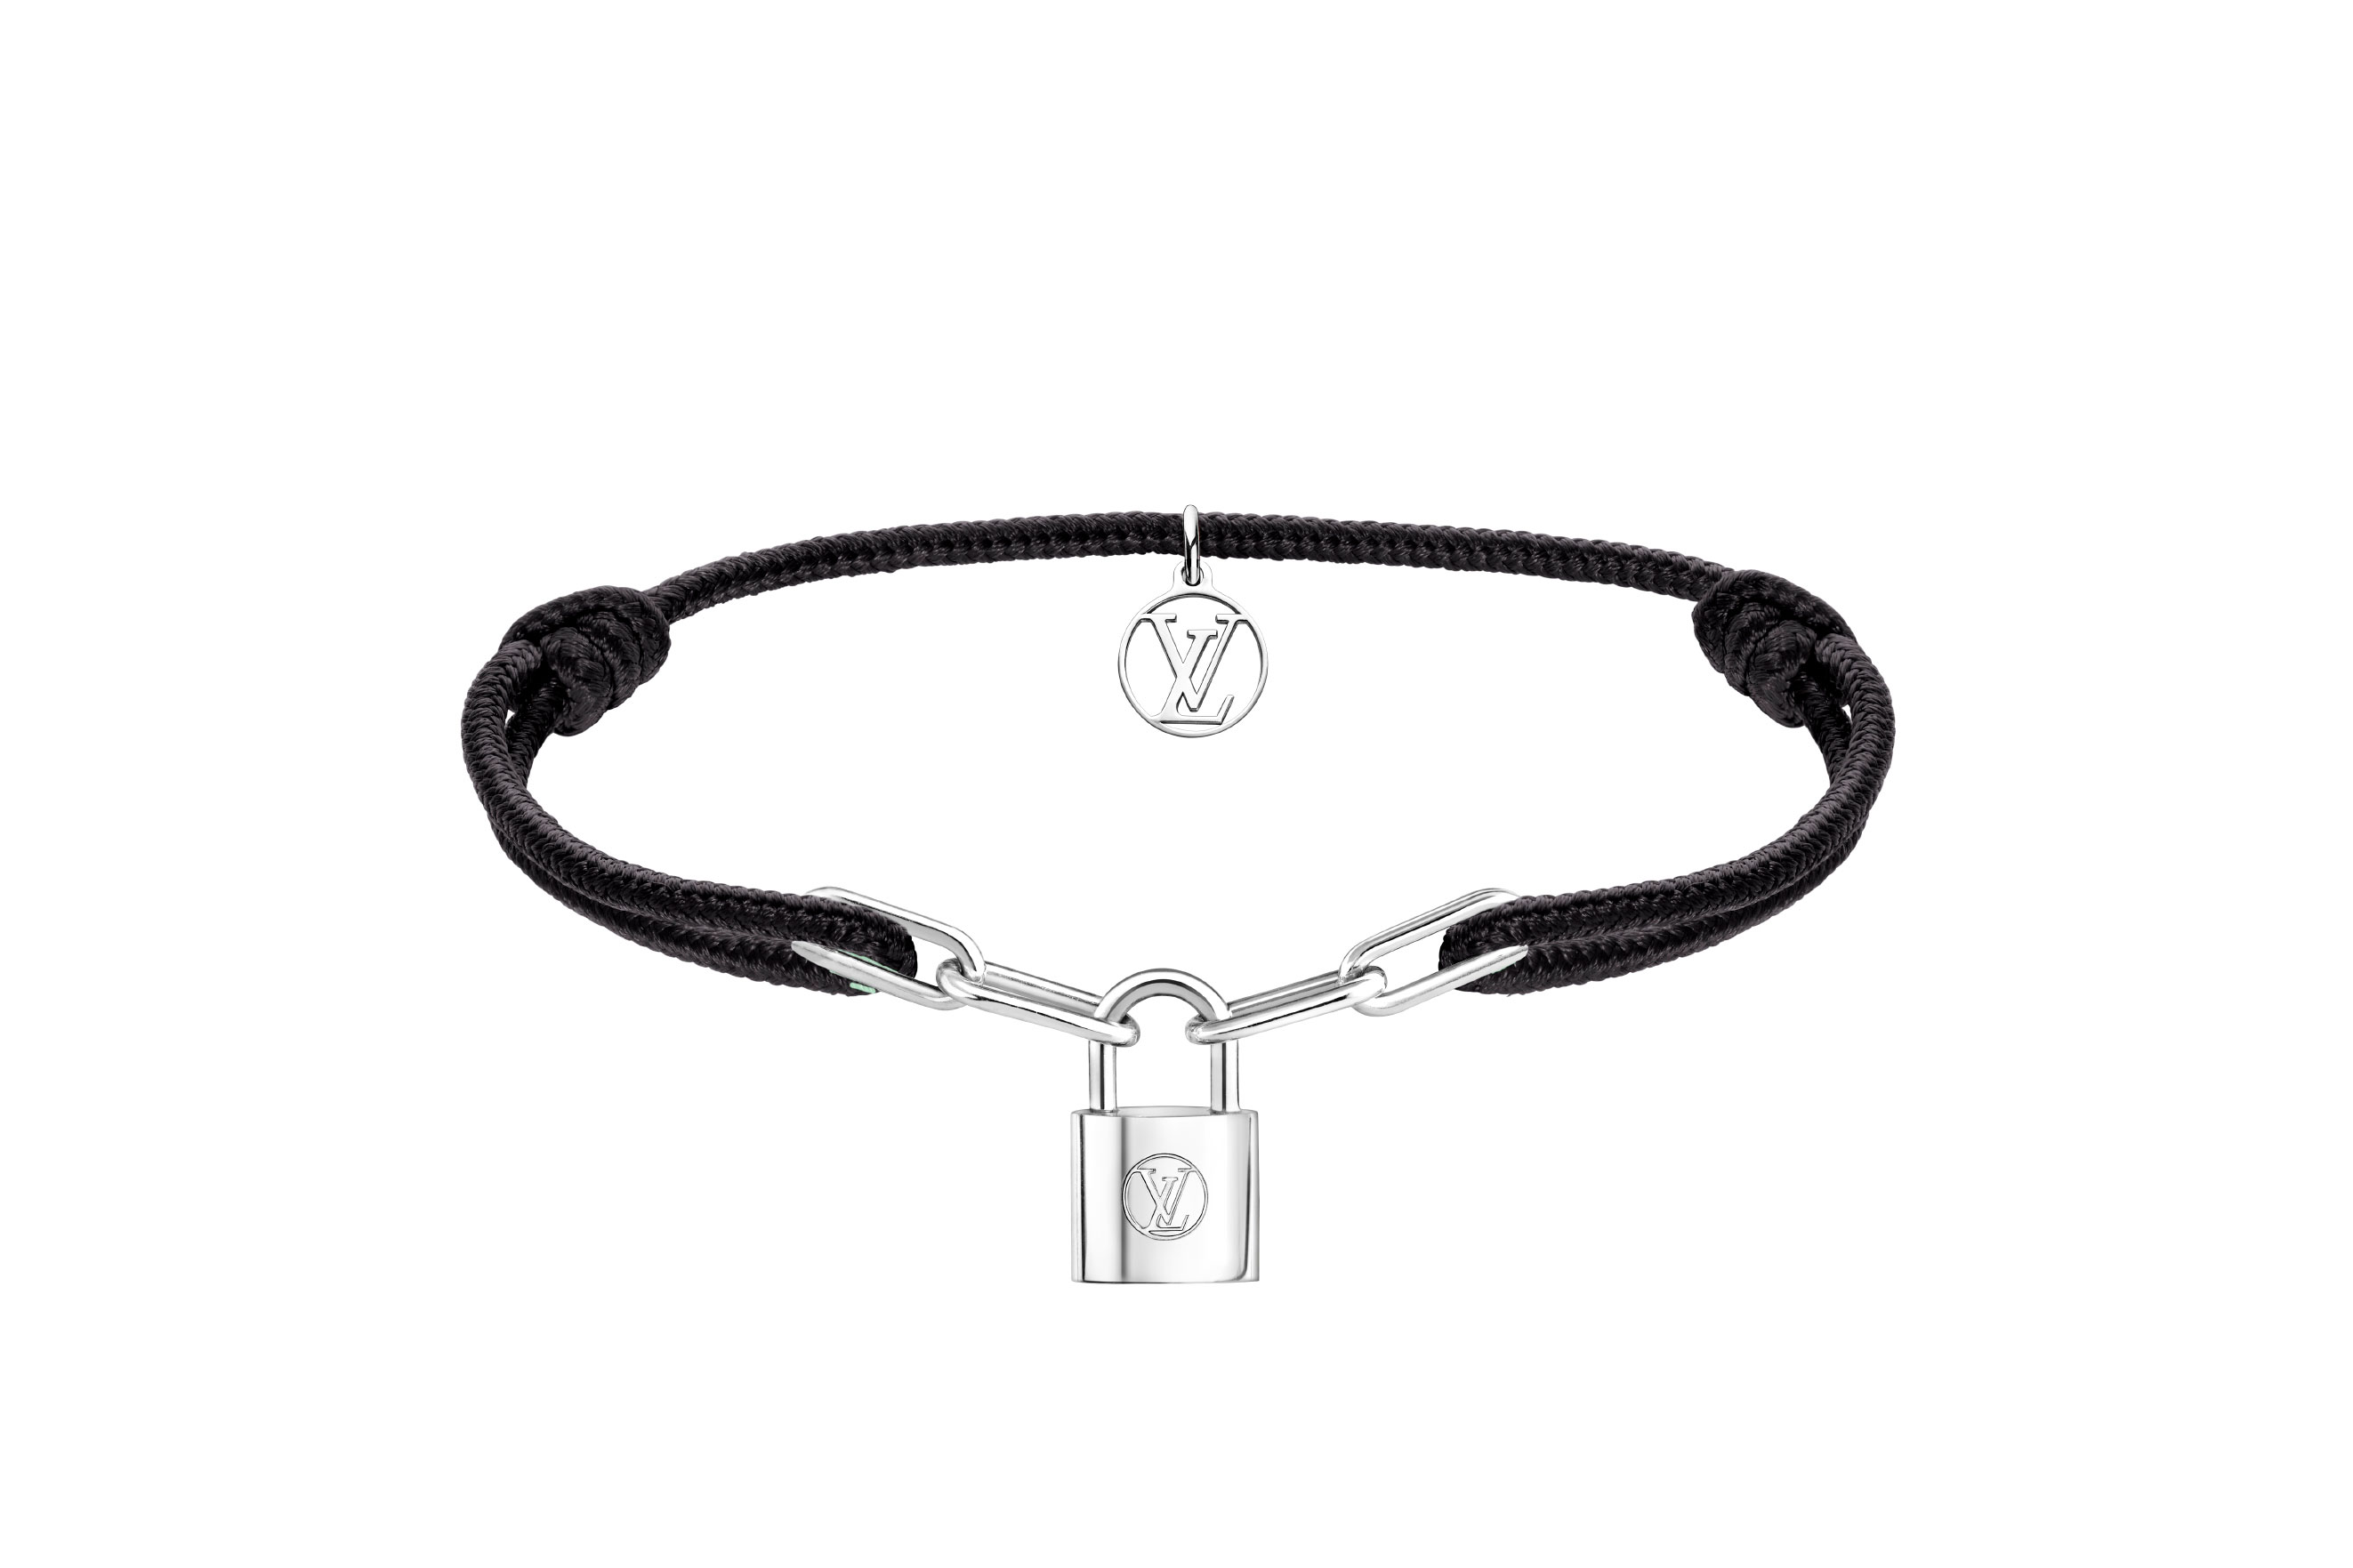 Louis Vuitton has created a bracelet for UNICEF